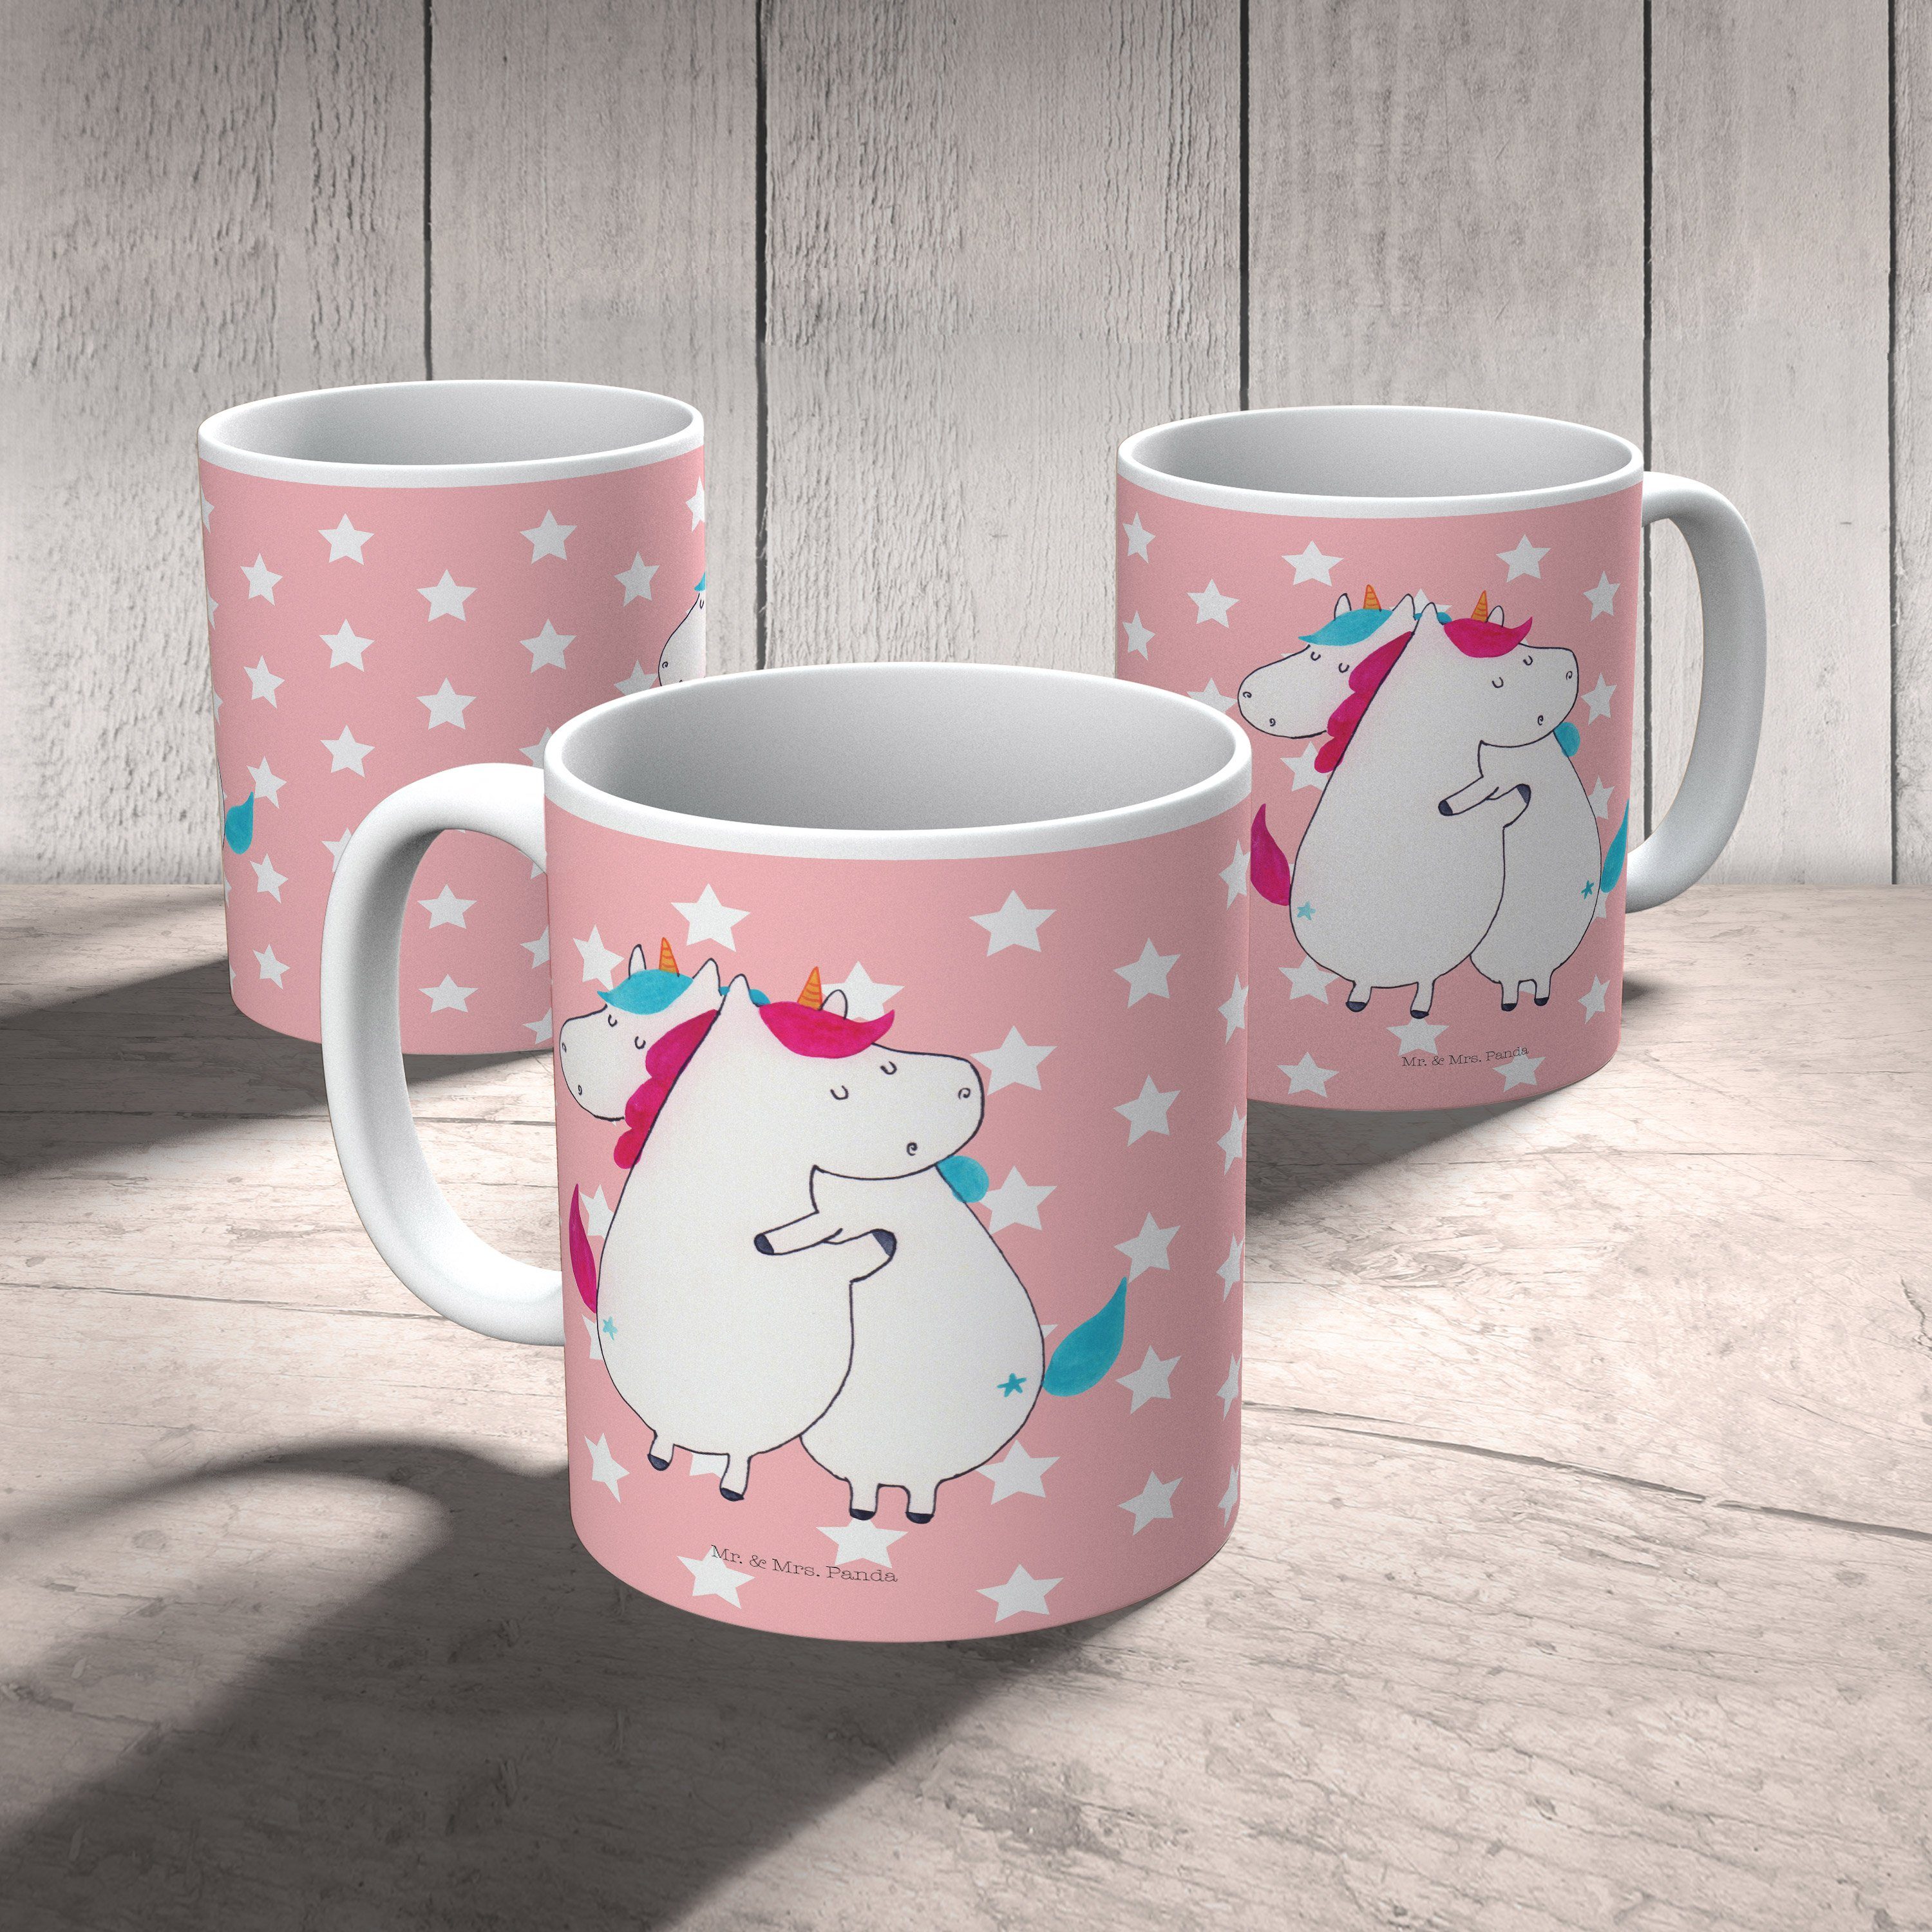 Mr. & Mrs. Panda Tasse Pegasus, Geschenk, - Keramik - Umarmen E, Tasse Pastell Rot Sprüche, Einhörner